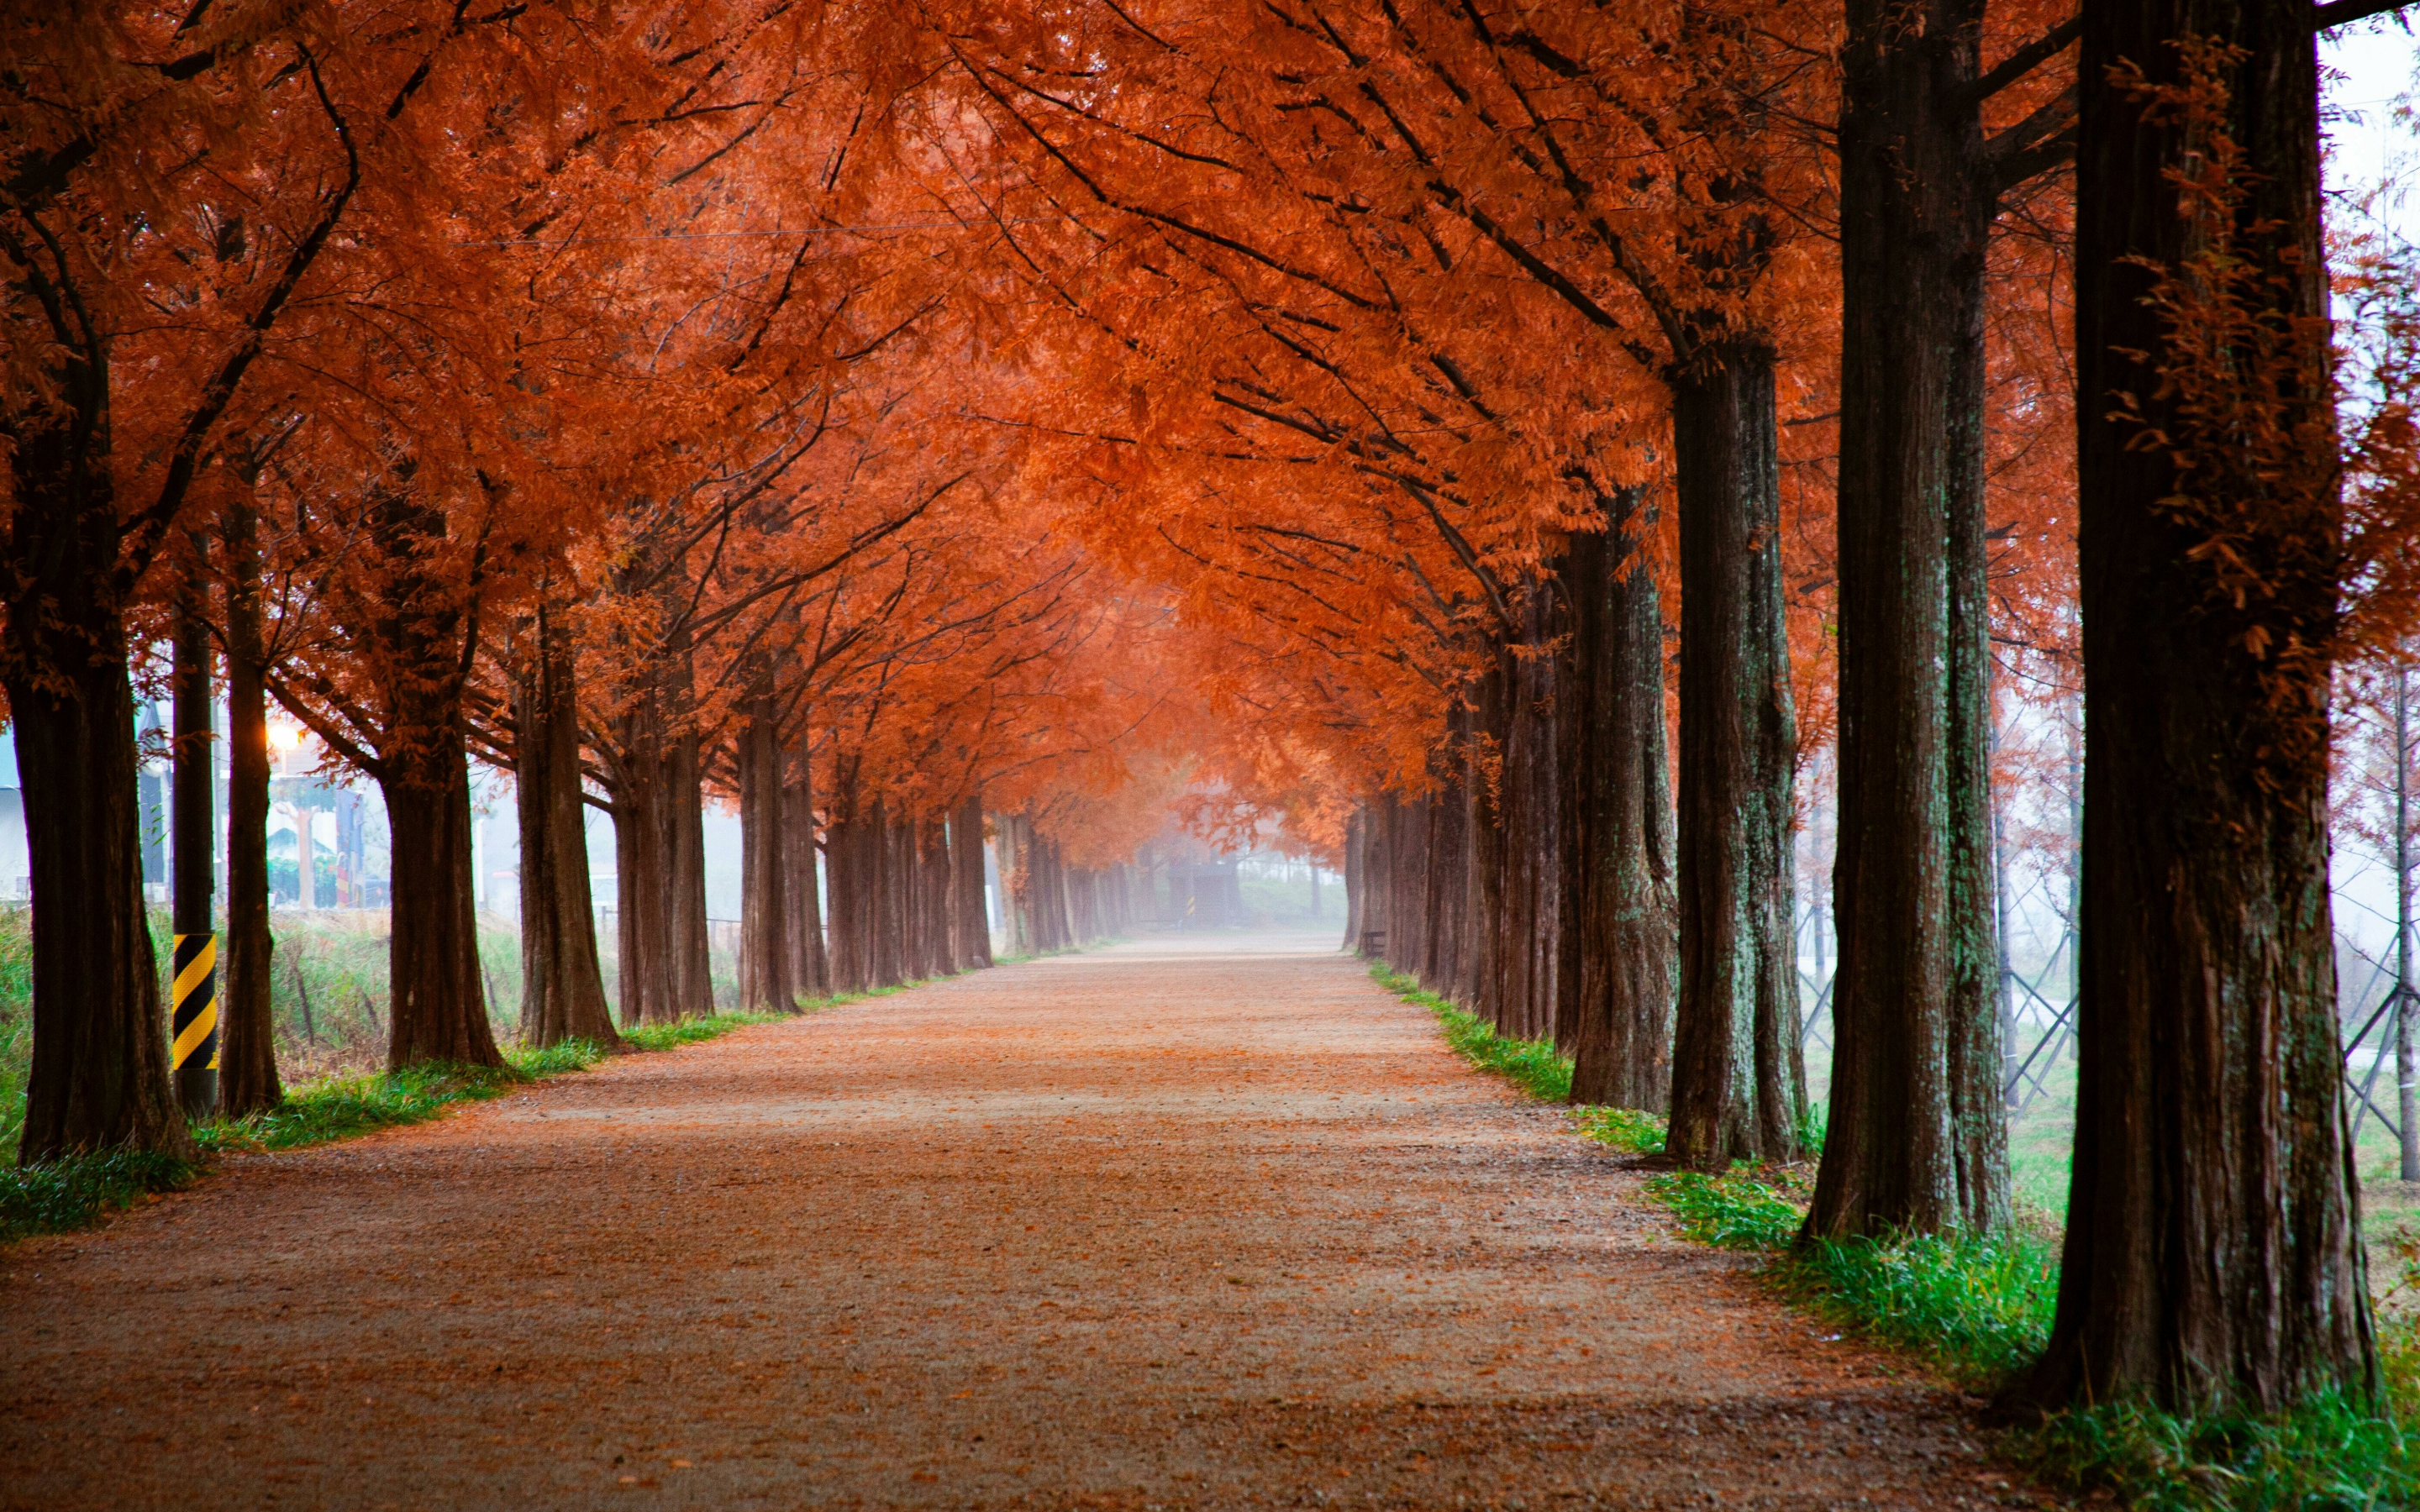 Autumn, trees, beautiful pathway, misty morning, nature, 2880x1800 wallpaper